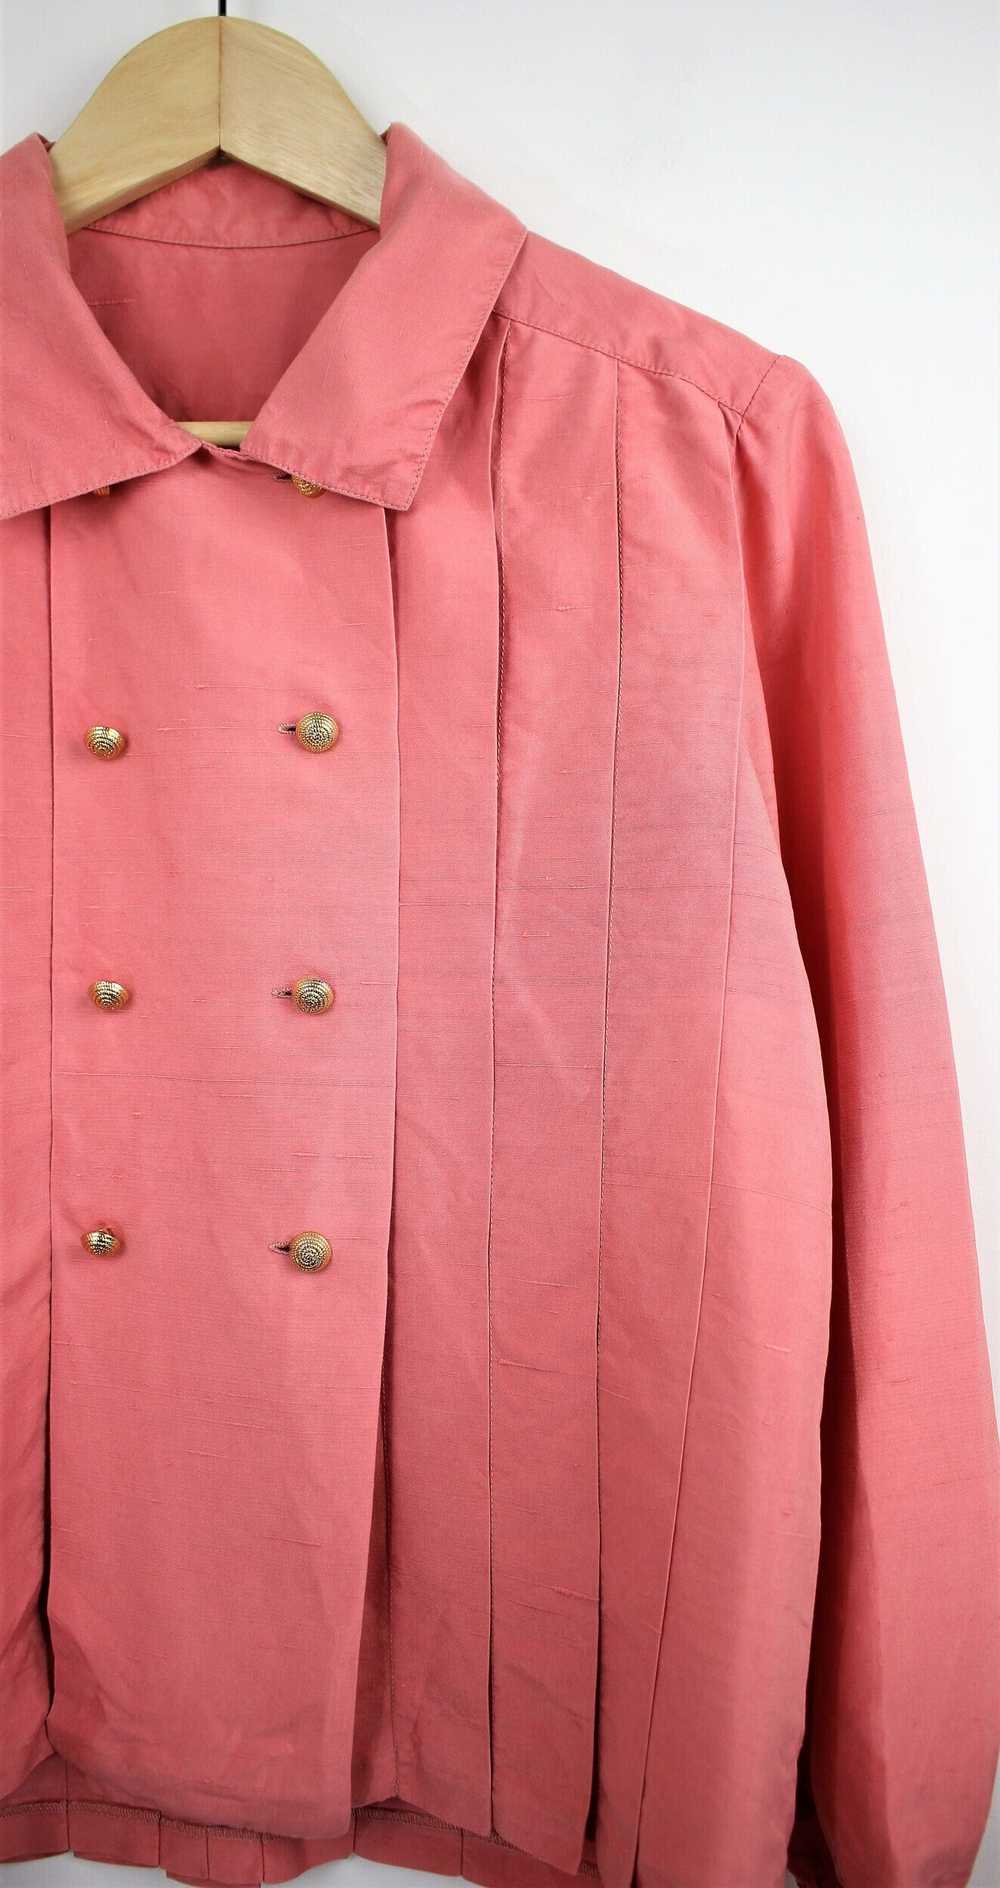 Lanvin shirt - 80s silk blouse - image 4